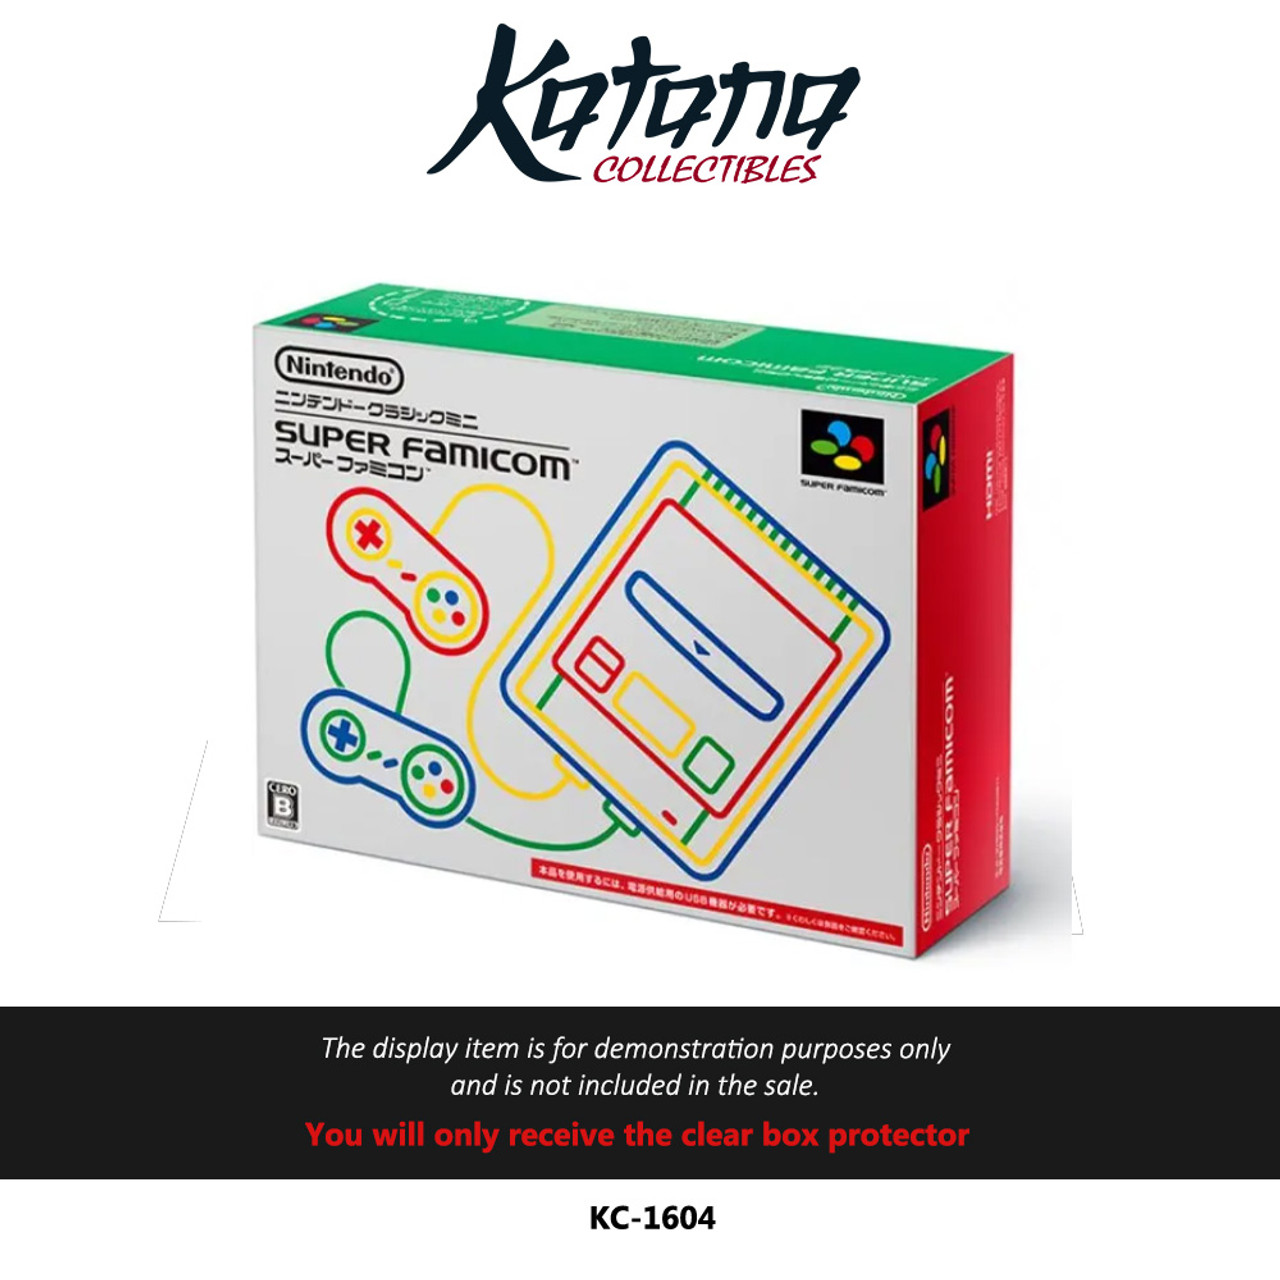 Katana Collectibles Protector For Nintendo Super Famicom Box